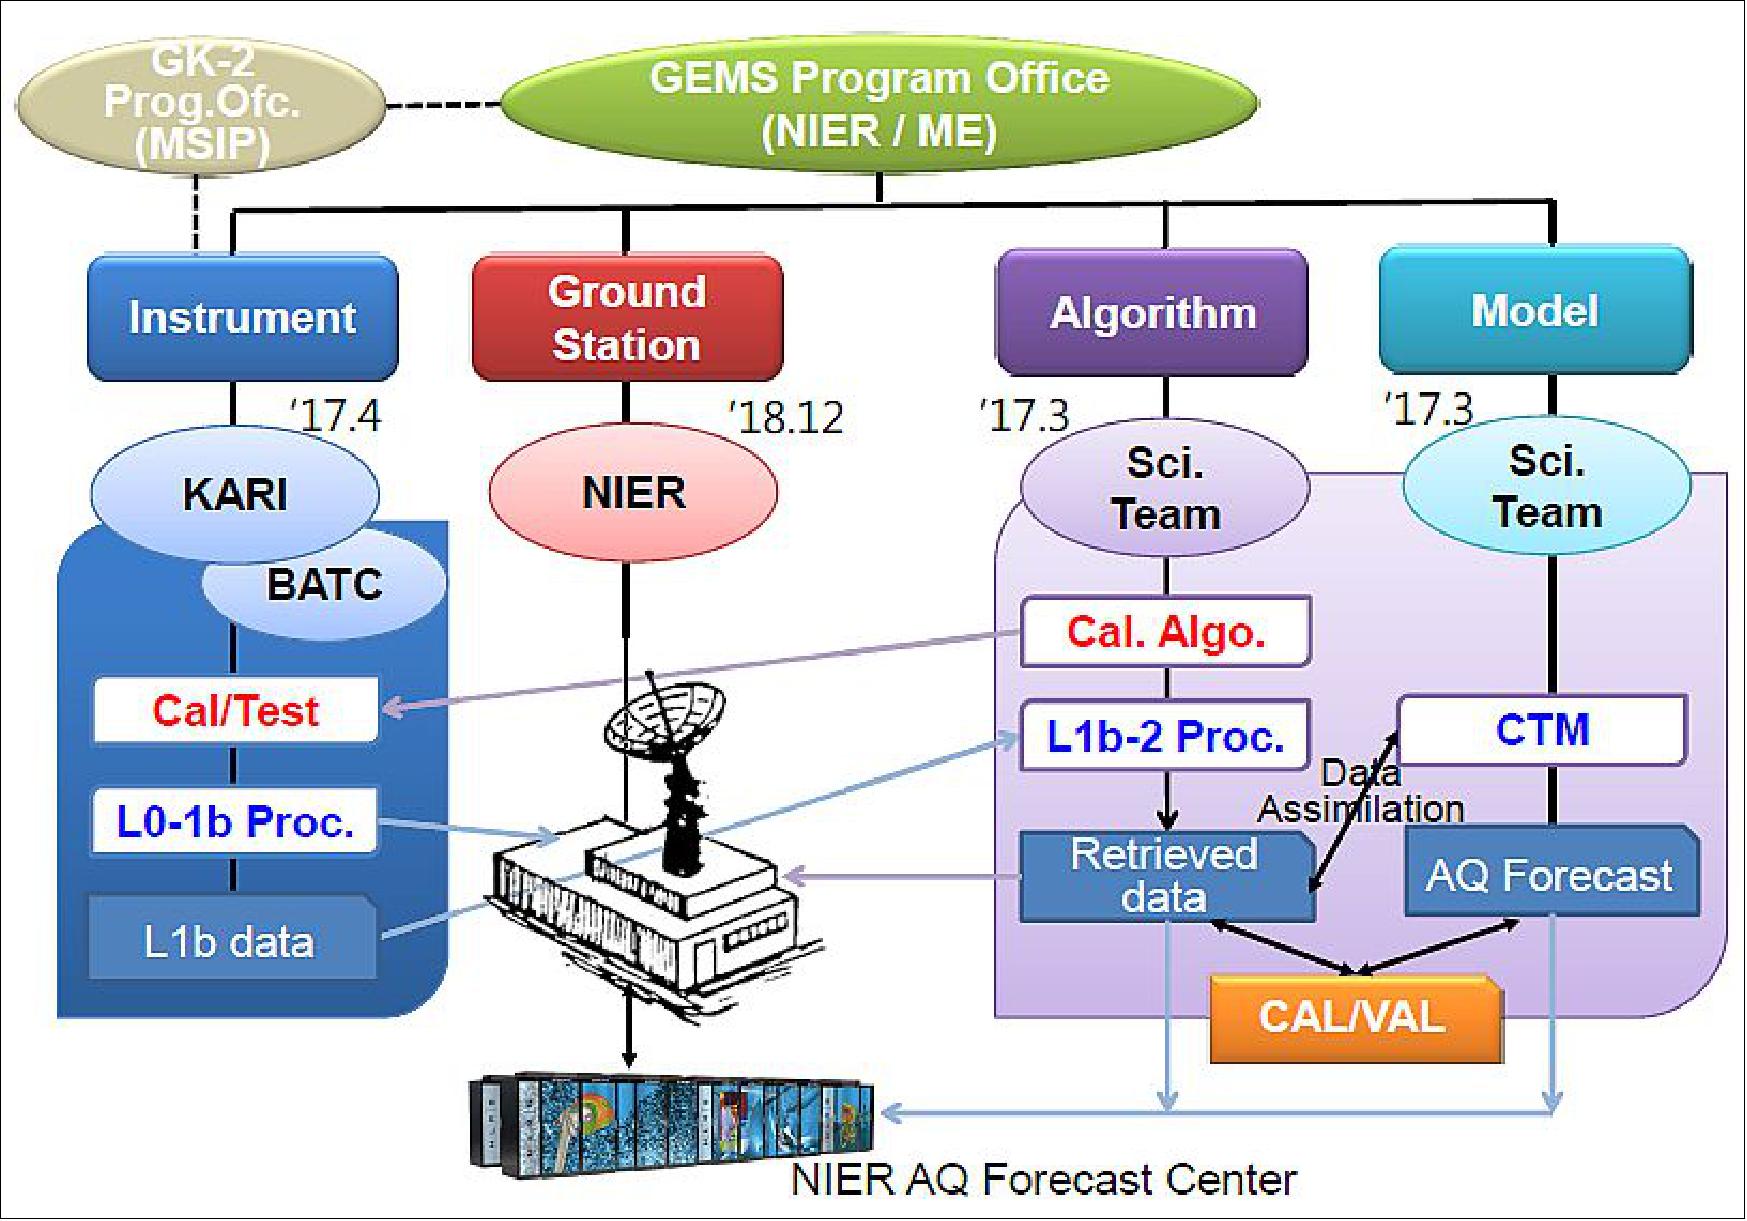 Figure 27: GEMS mission organization (image credit: GEO-KOMPSAT-2 collaboration) 40)